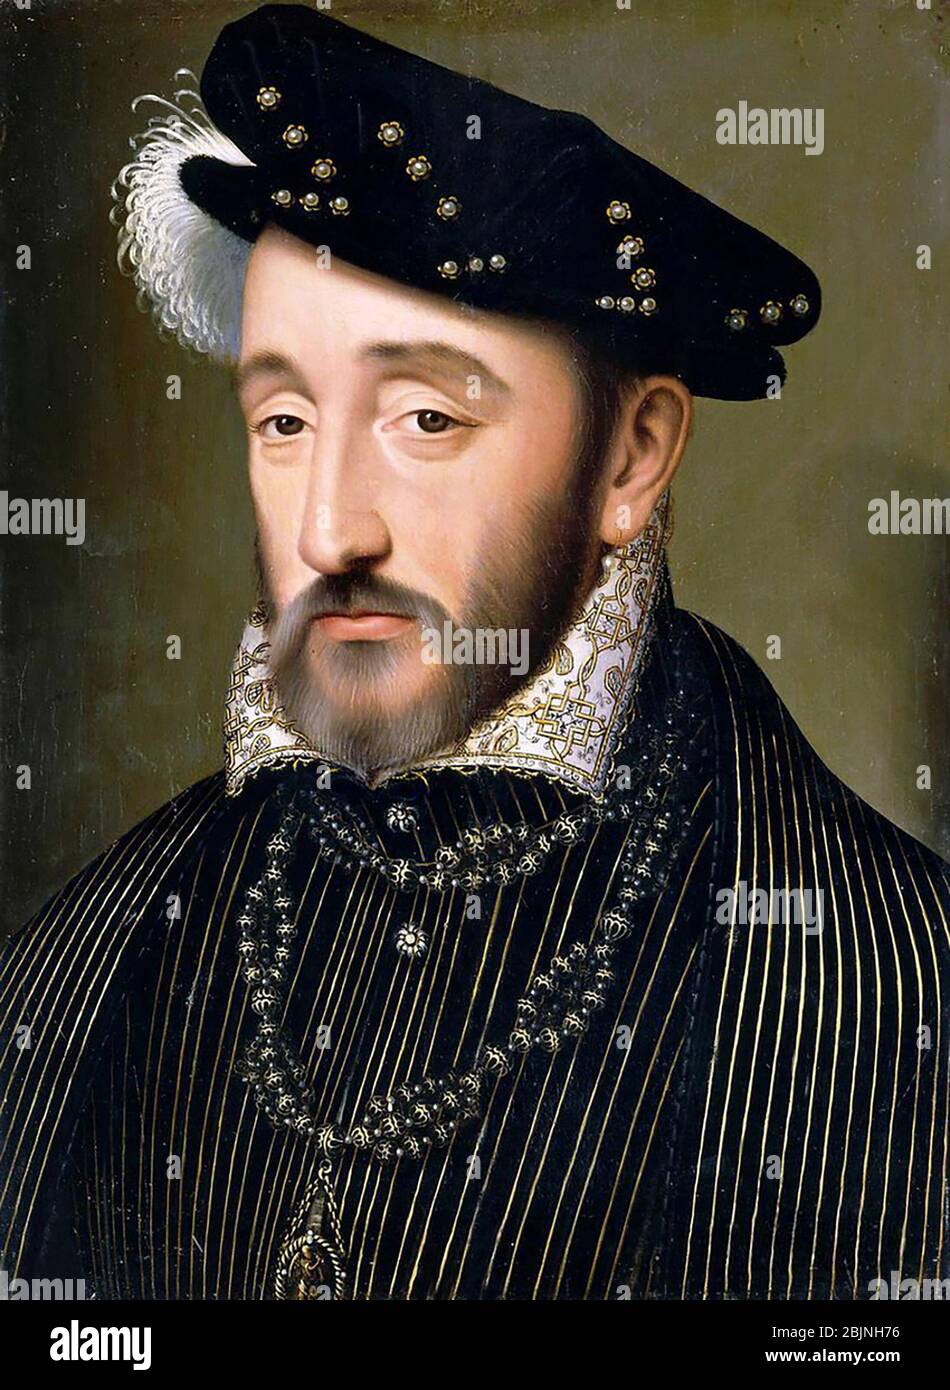 ENRIQUE II DE FRANCIA (1519-1559) de François Clouet Foto de stock